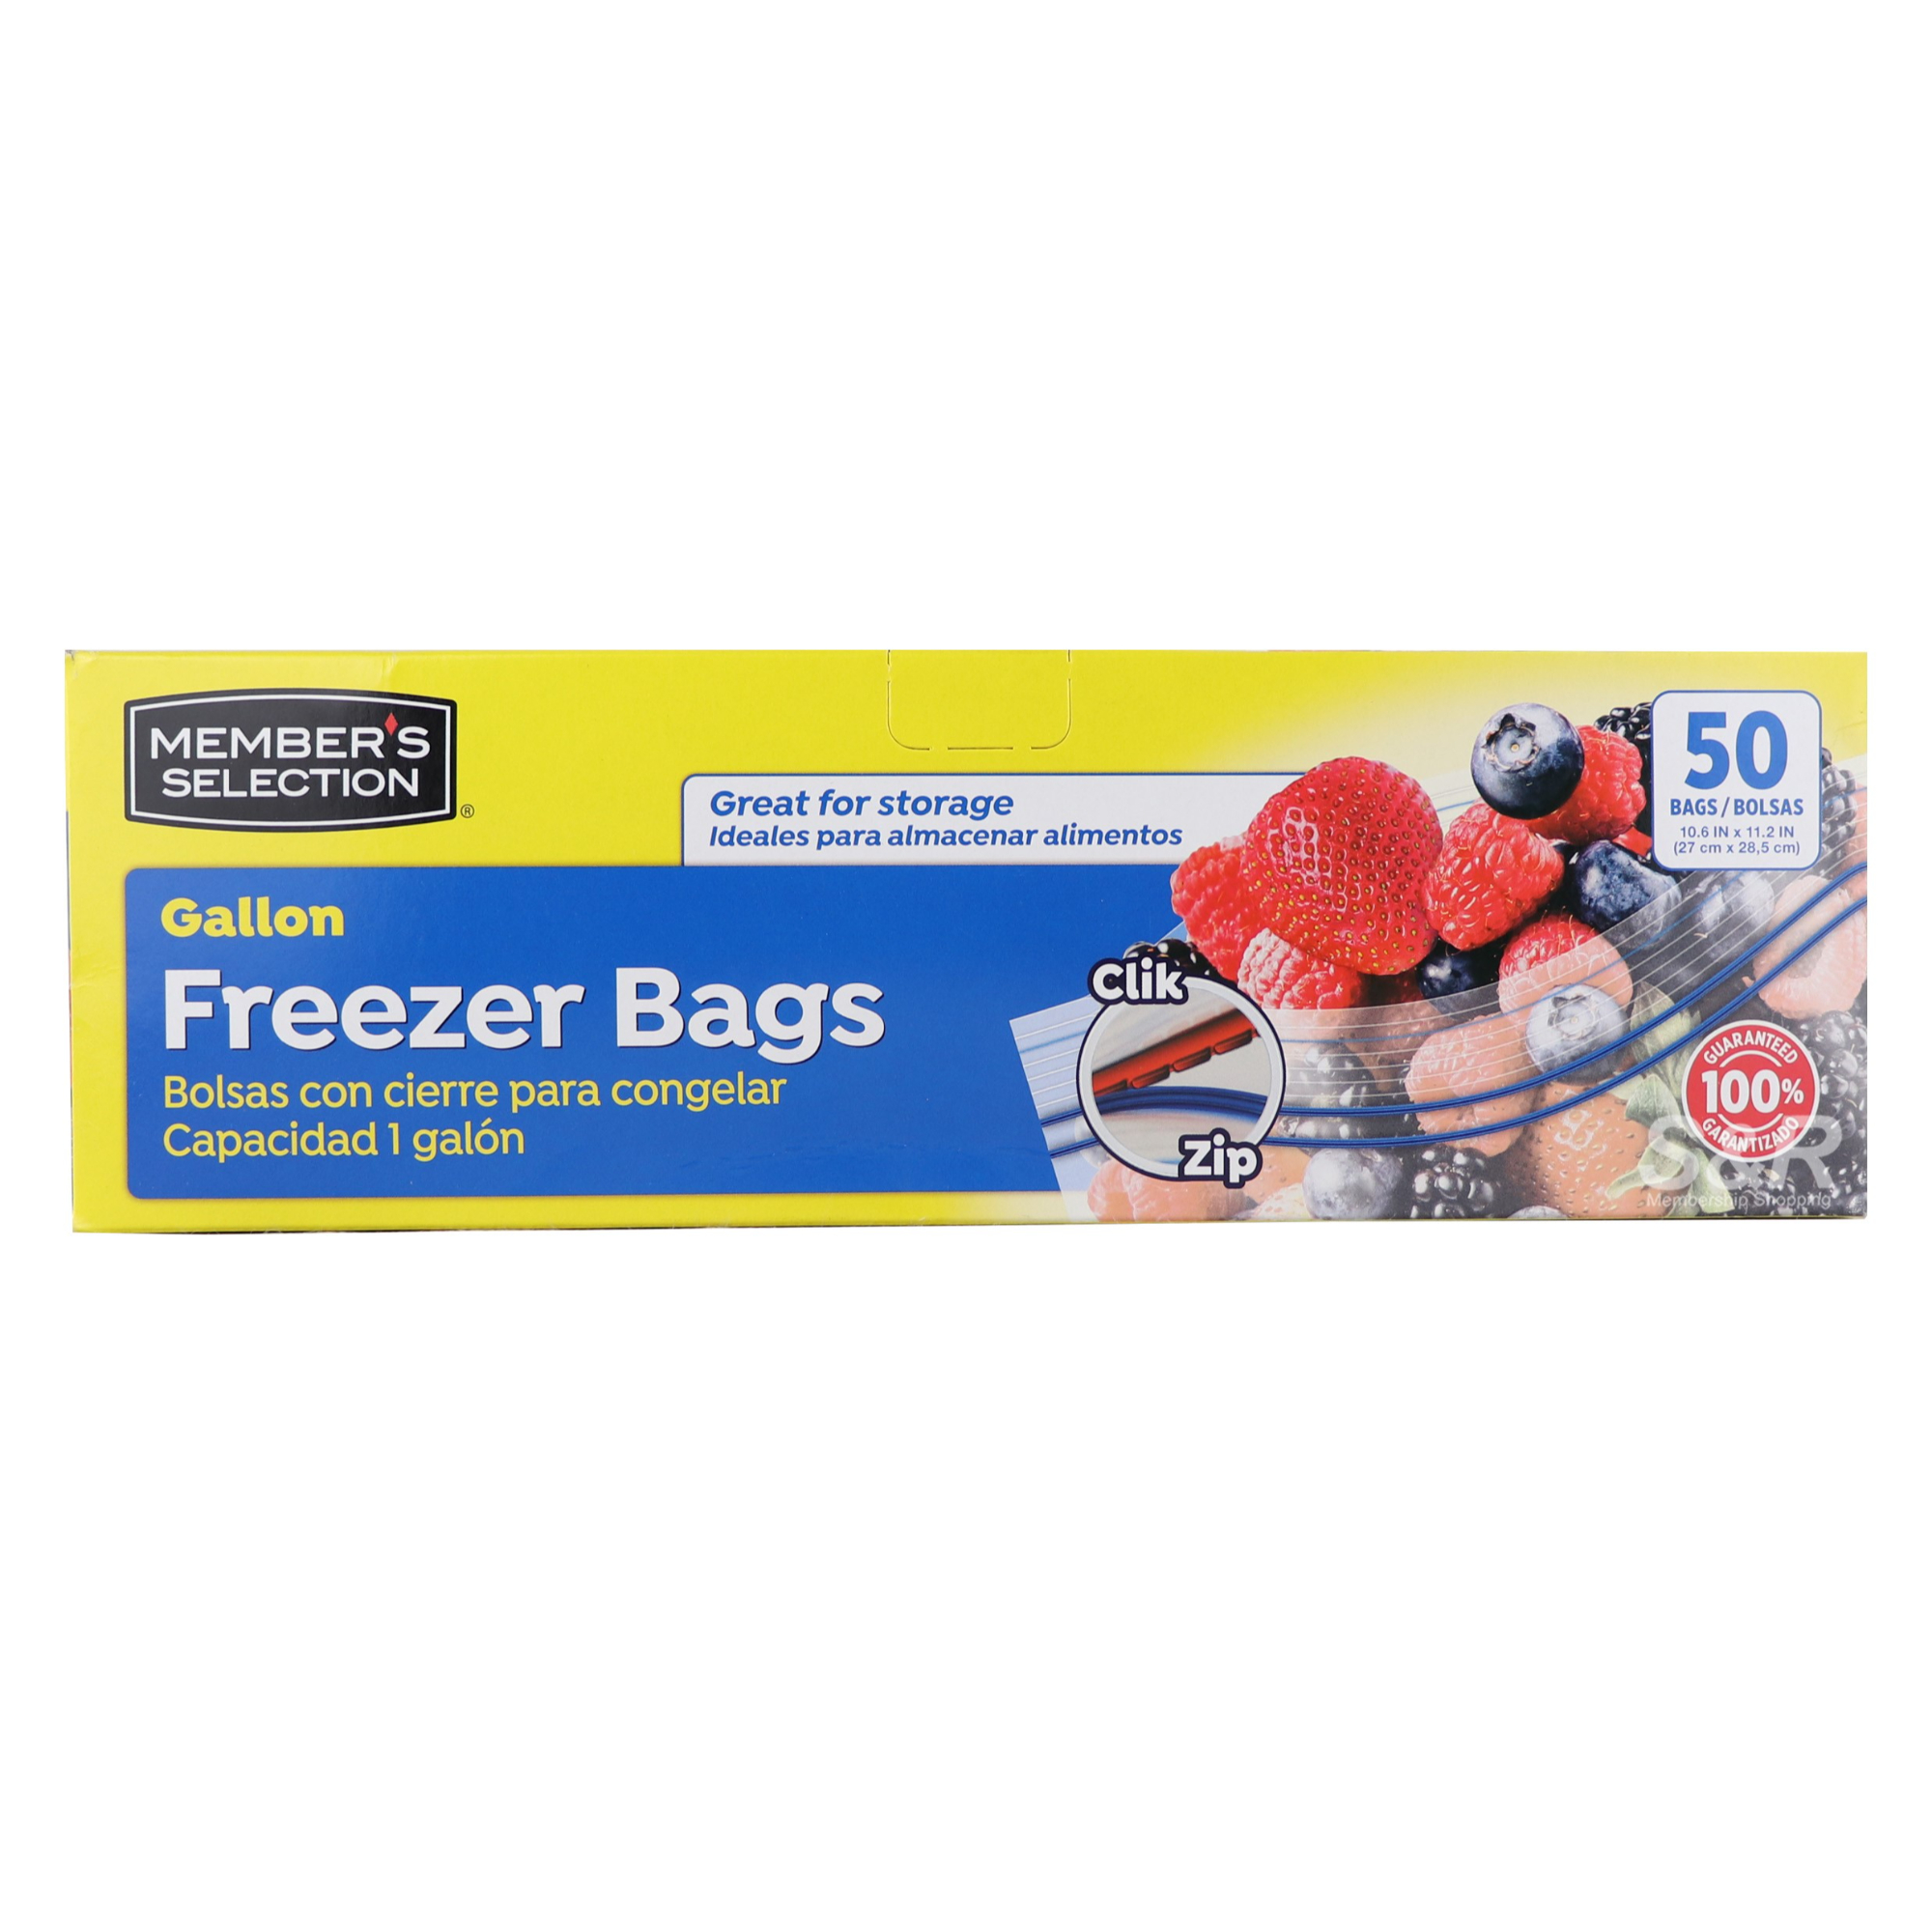 Member's Selection Gallon Freezer Bags 50pcs